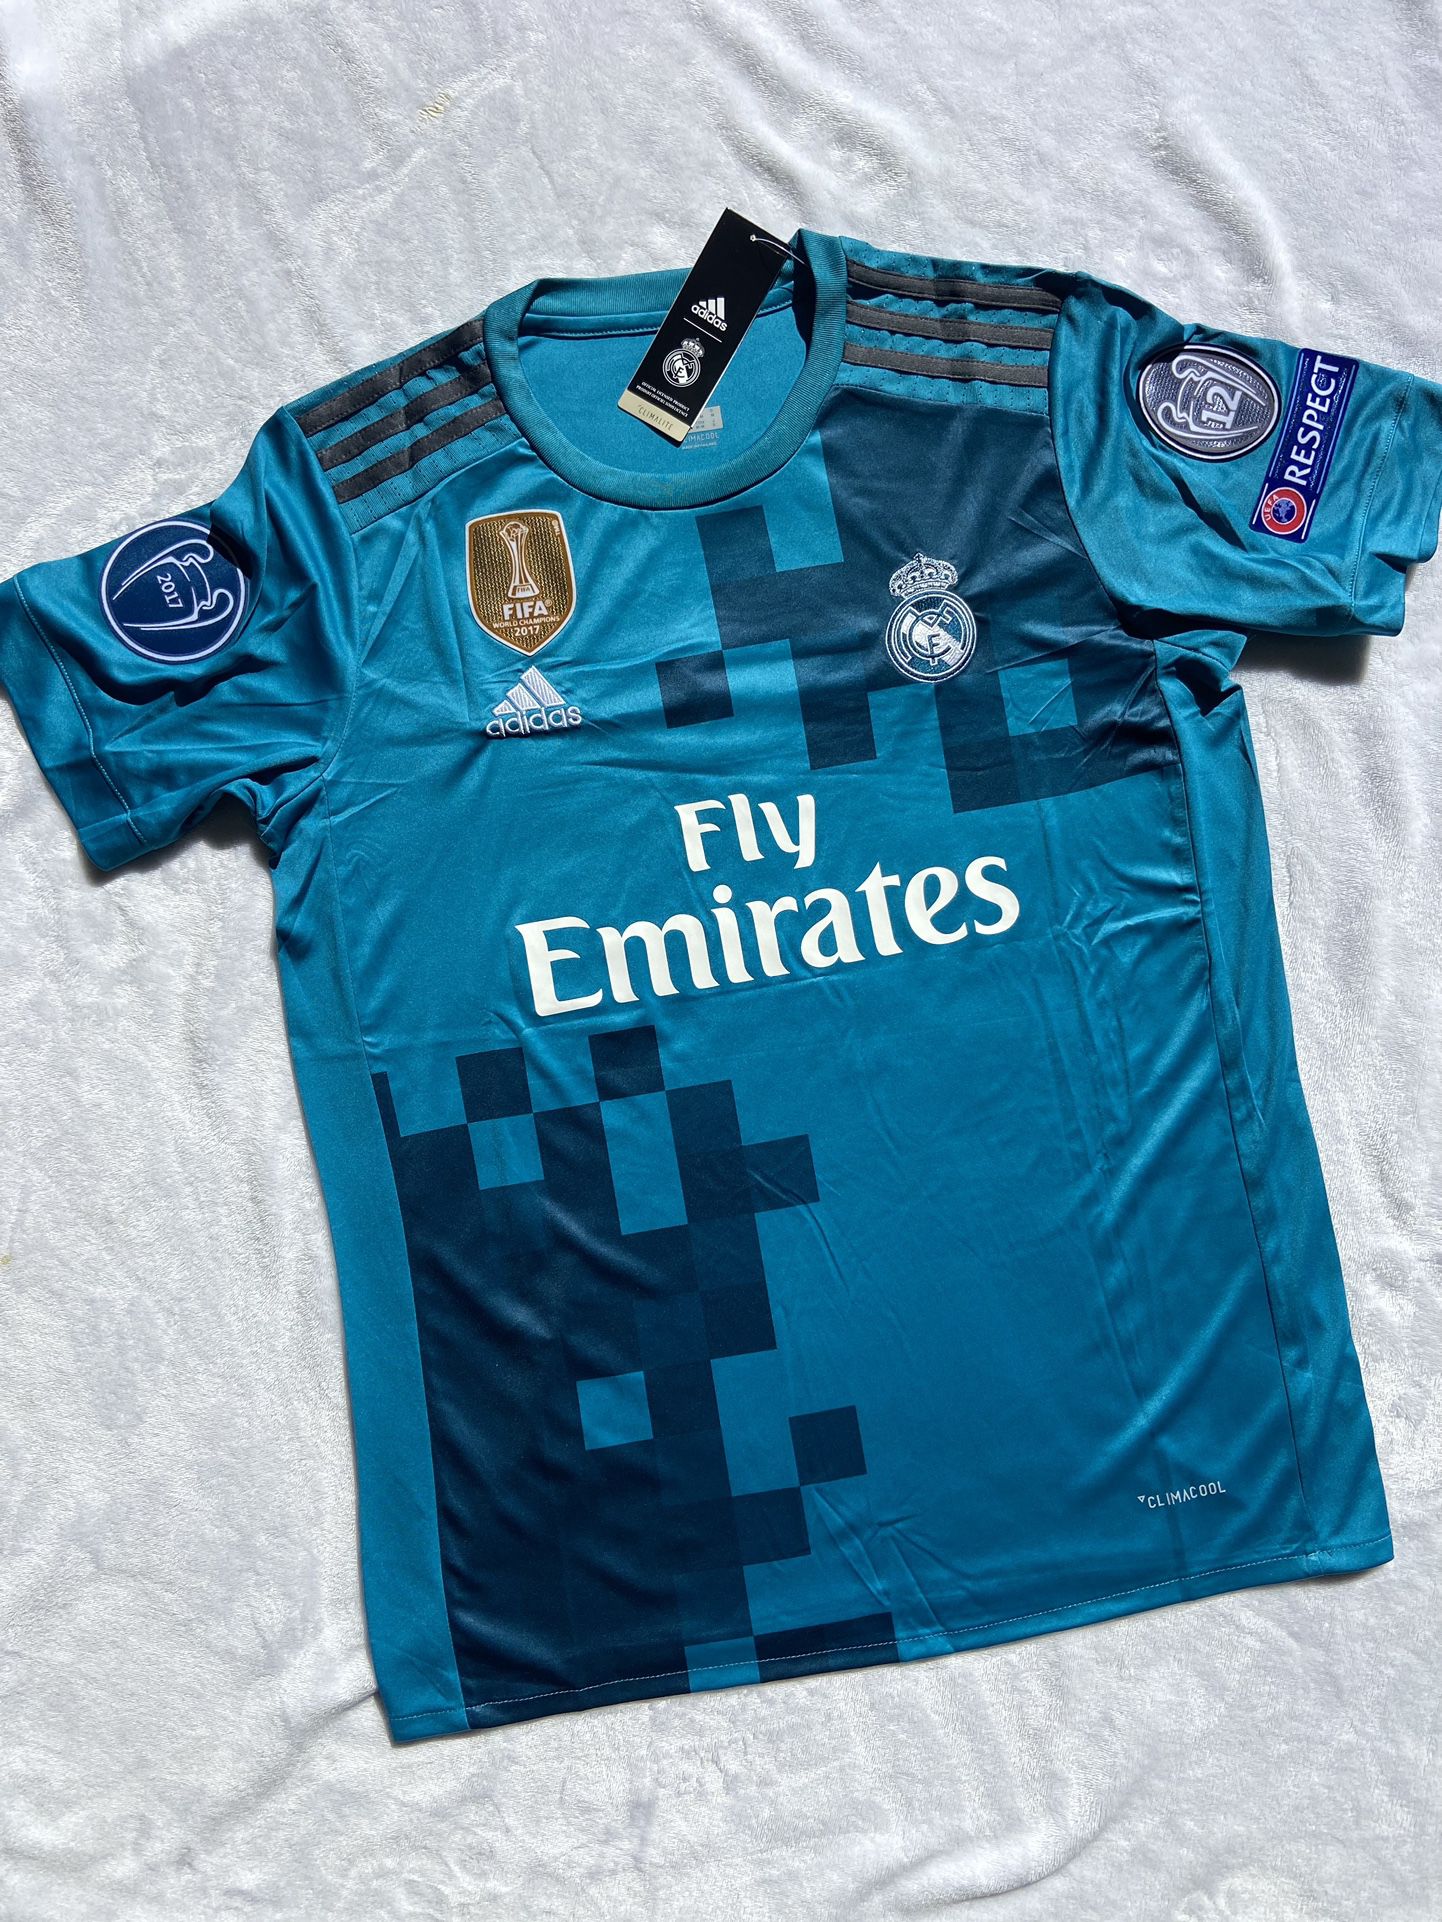 Jersey Soccer Real Madrid Ronaldo Camiseta Fútbol Playera Size S M L